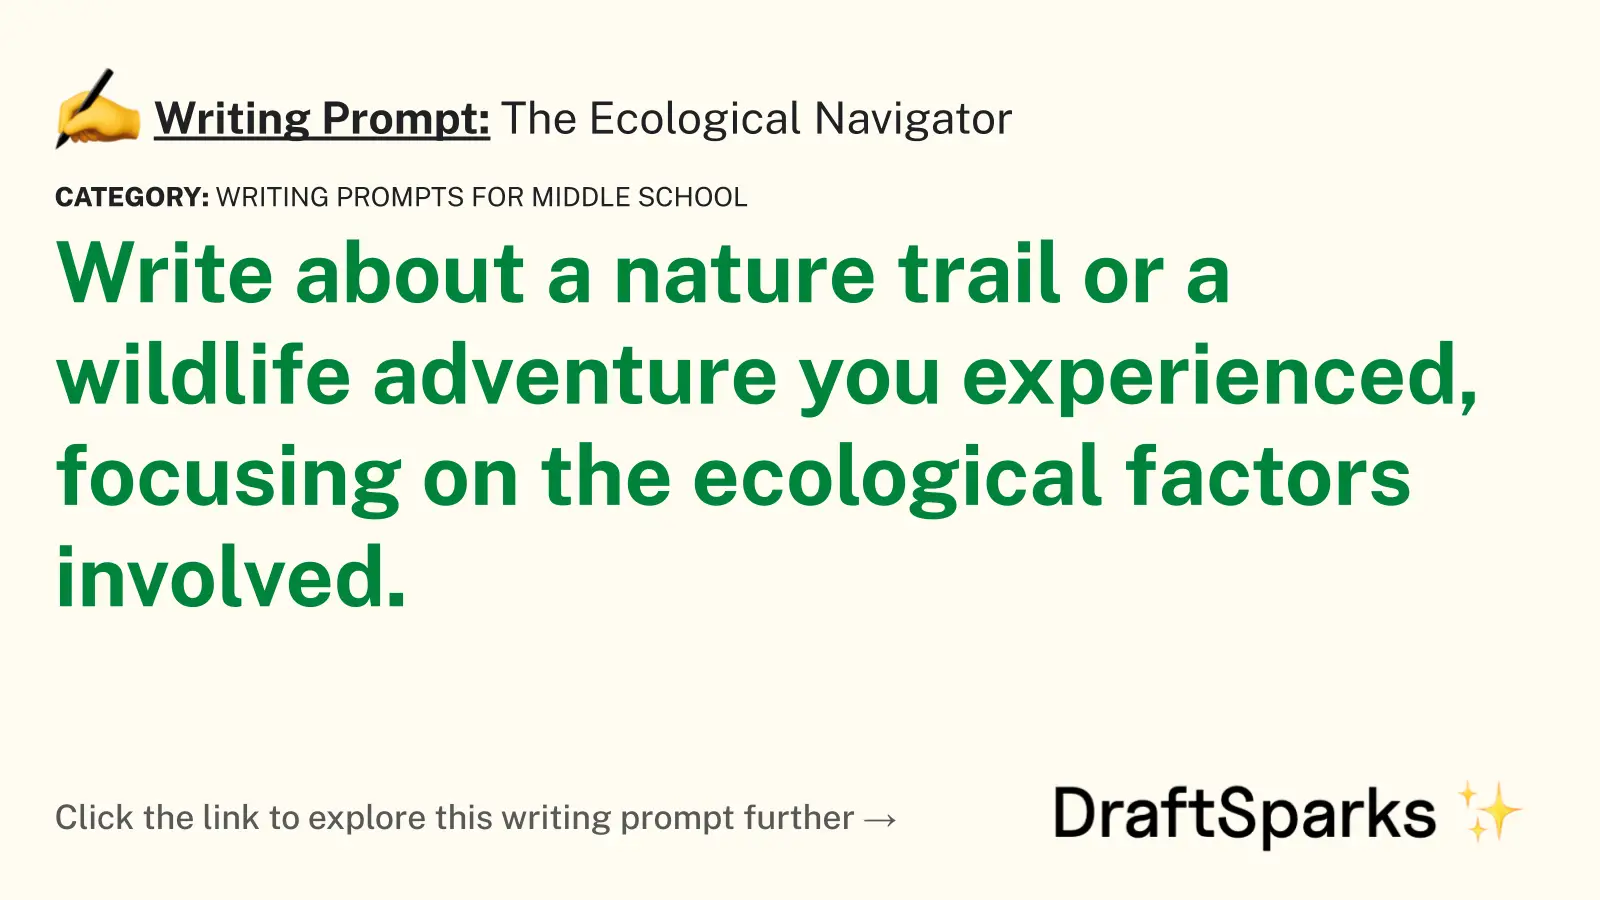 The Ecological Navigator